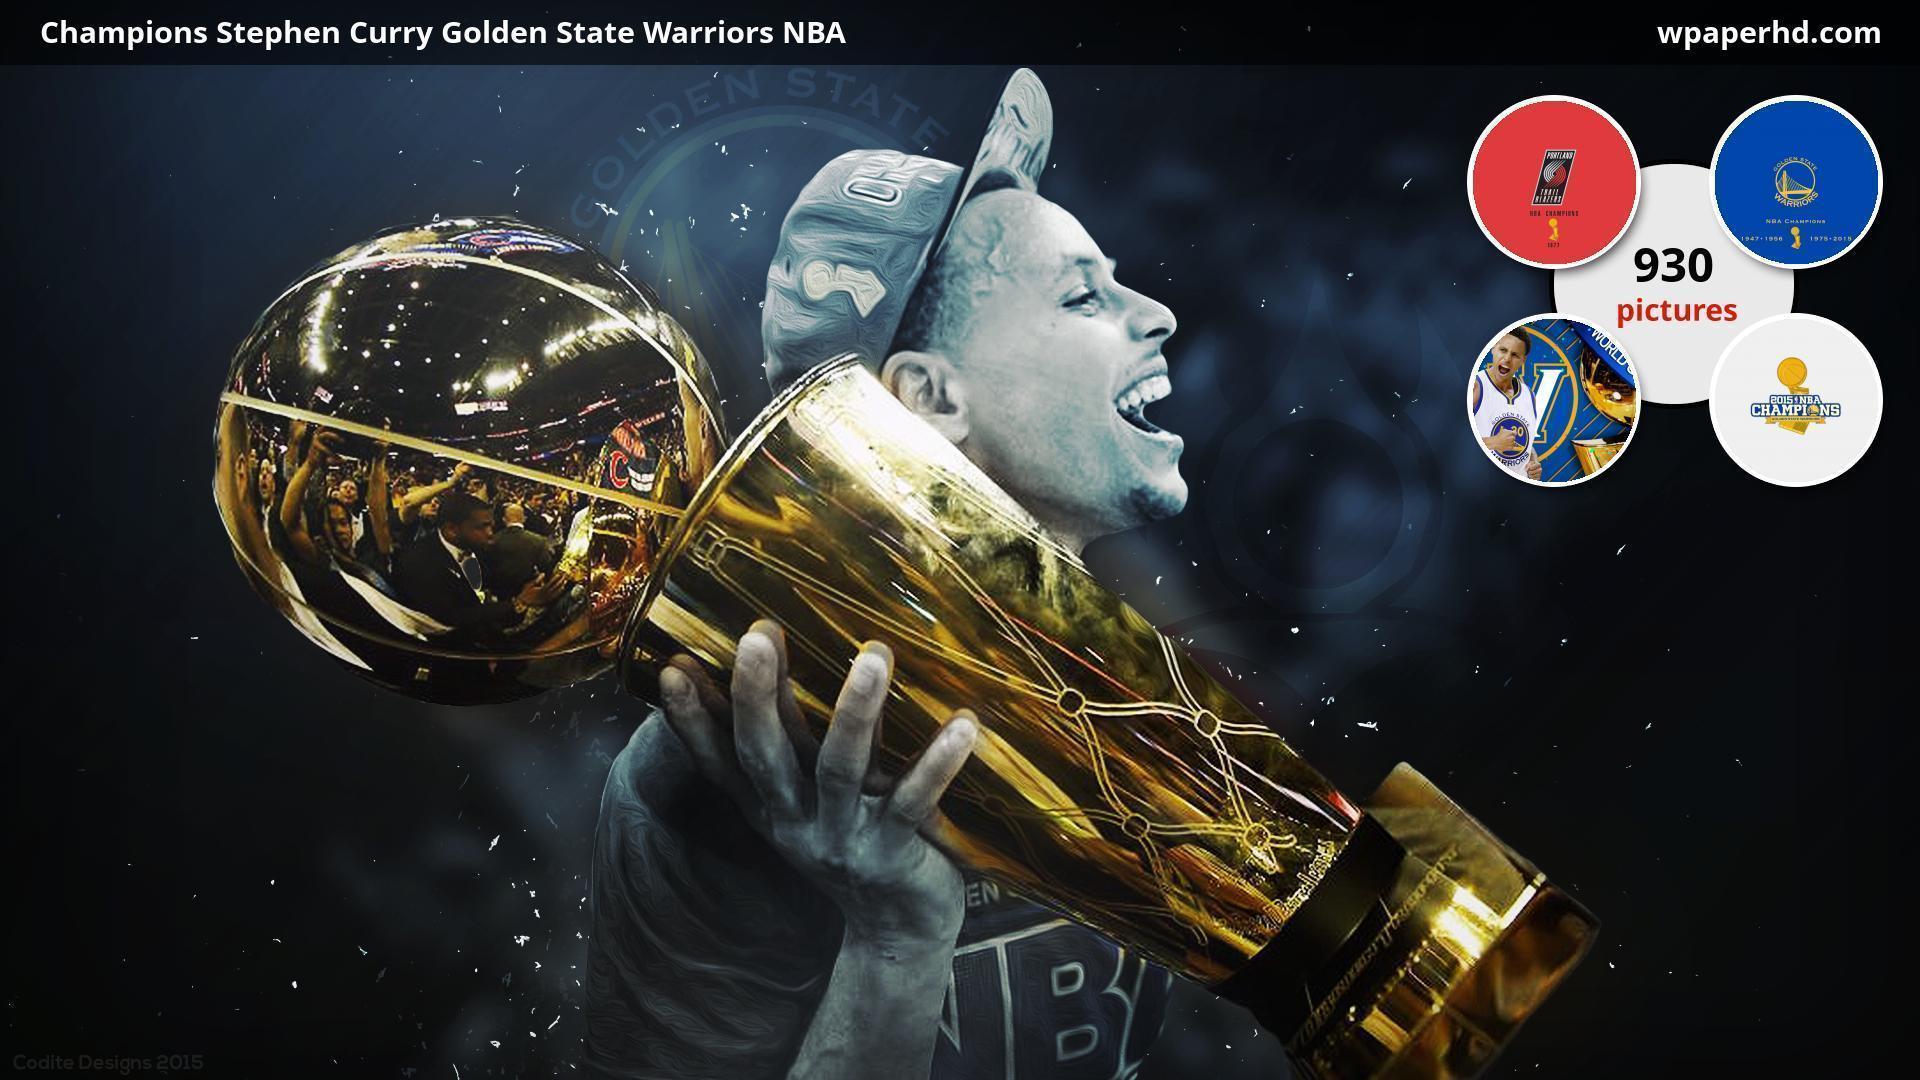 Stephen Curry Golden State Warriors Wallpapers Hd ~ Sdeerwallpapers